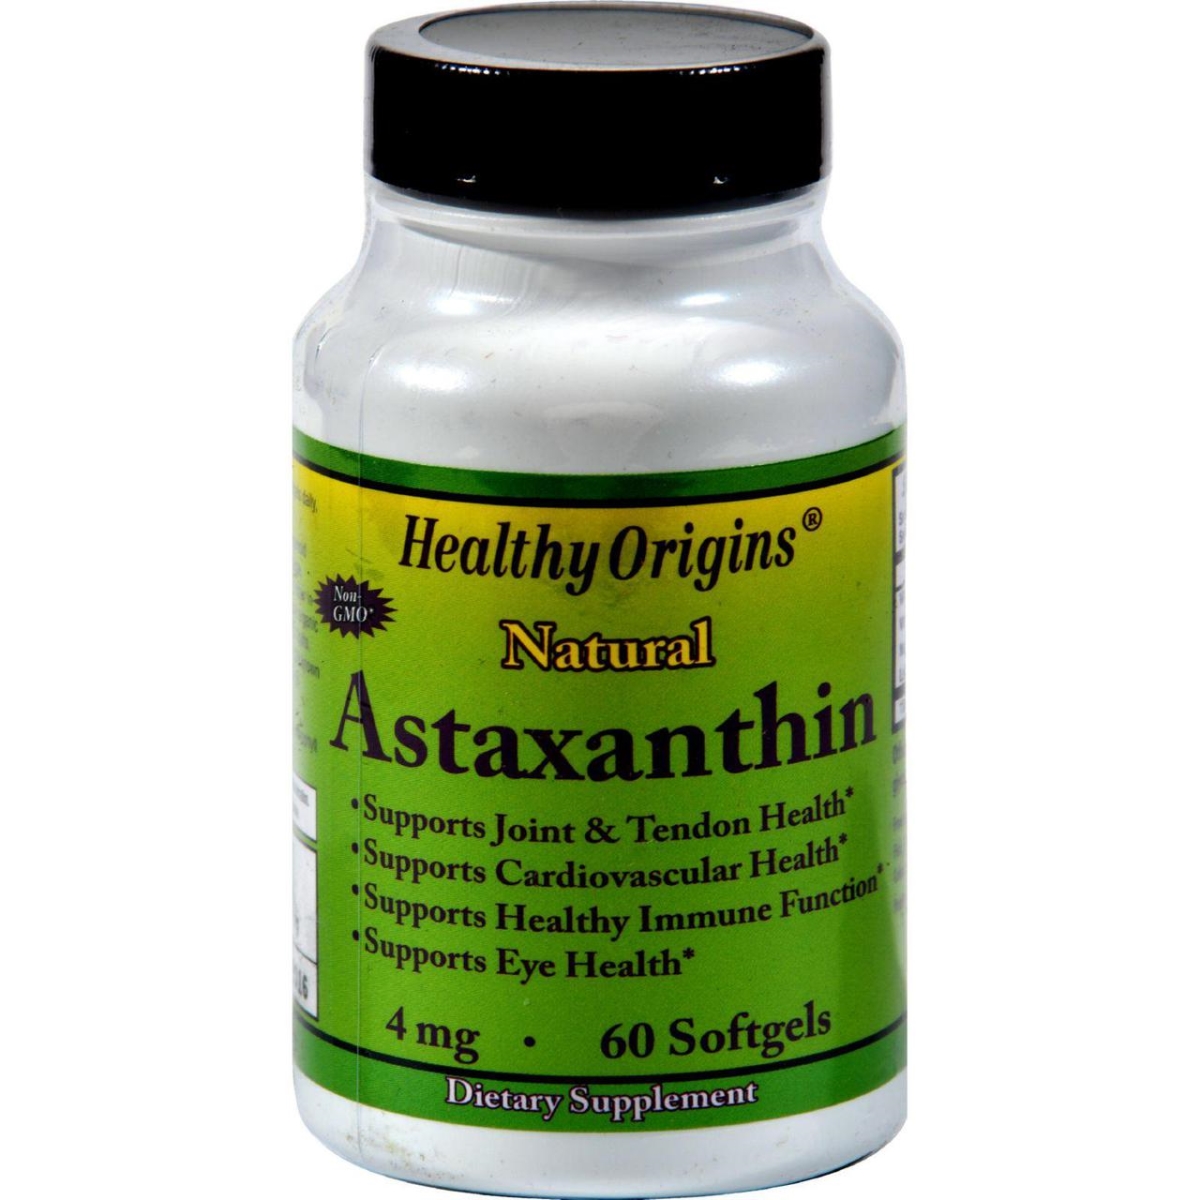 Hg0581199 4 Mg Astaxanthin - 60 Softgels